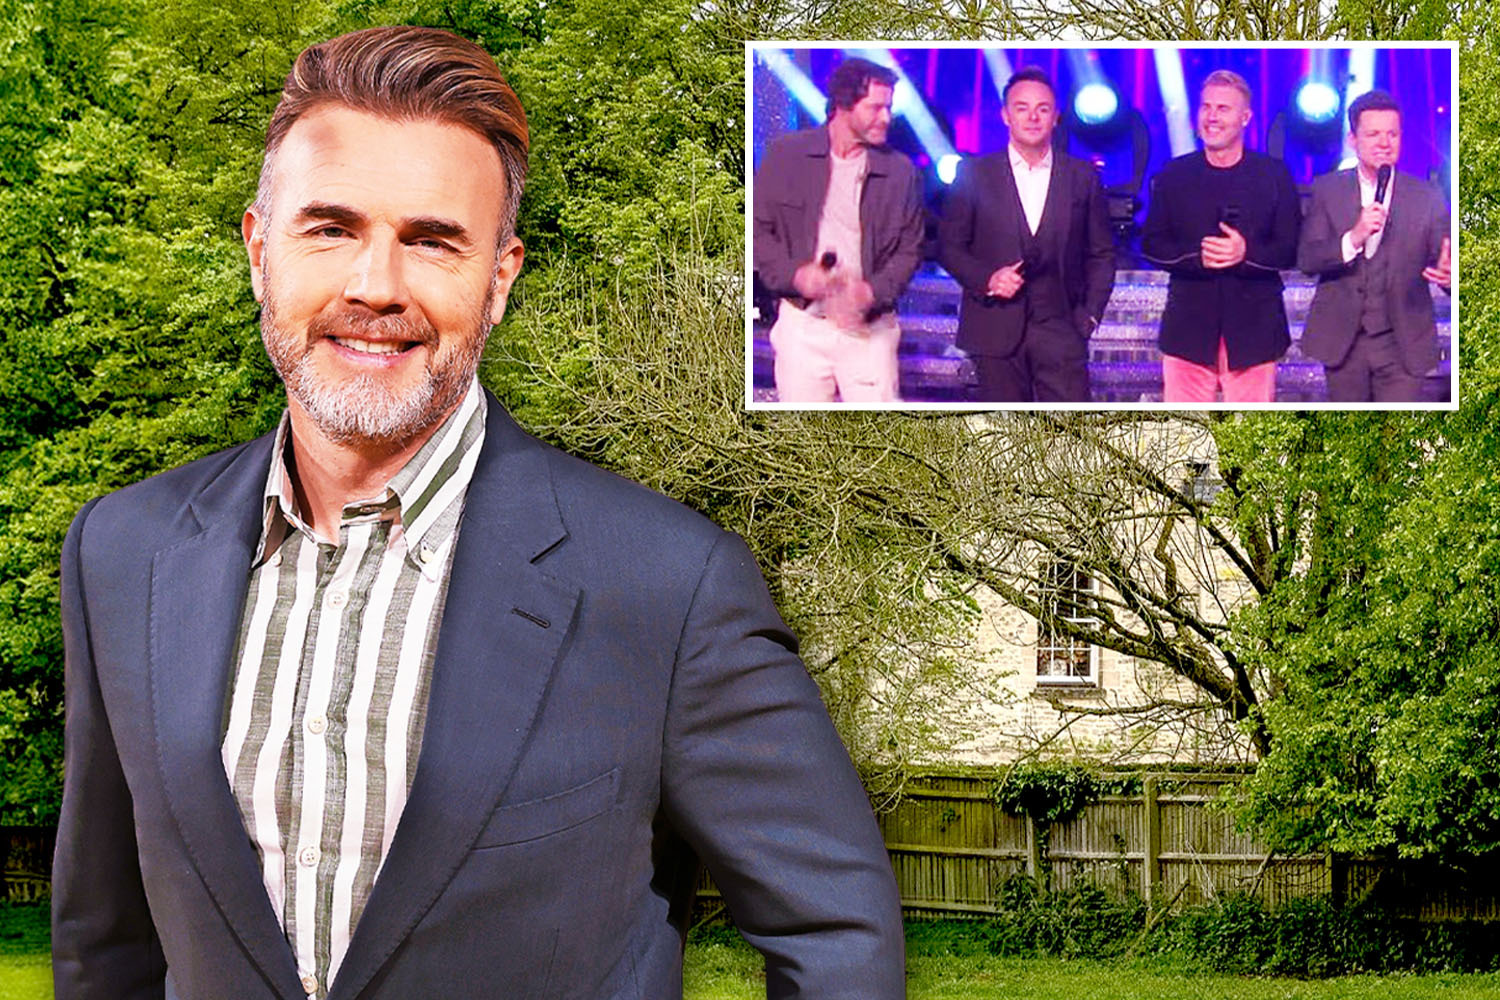 Gary Barlow's £6m home raided by gang as he filmed Saturday Night Takeaway